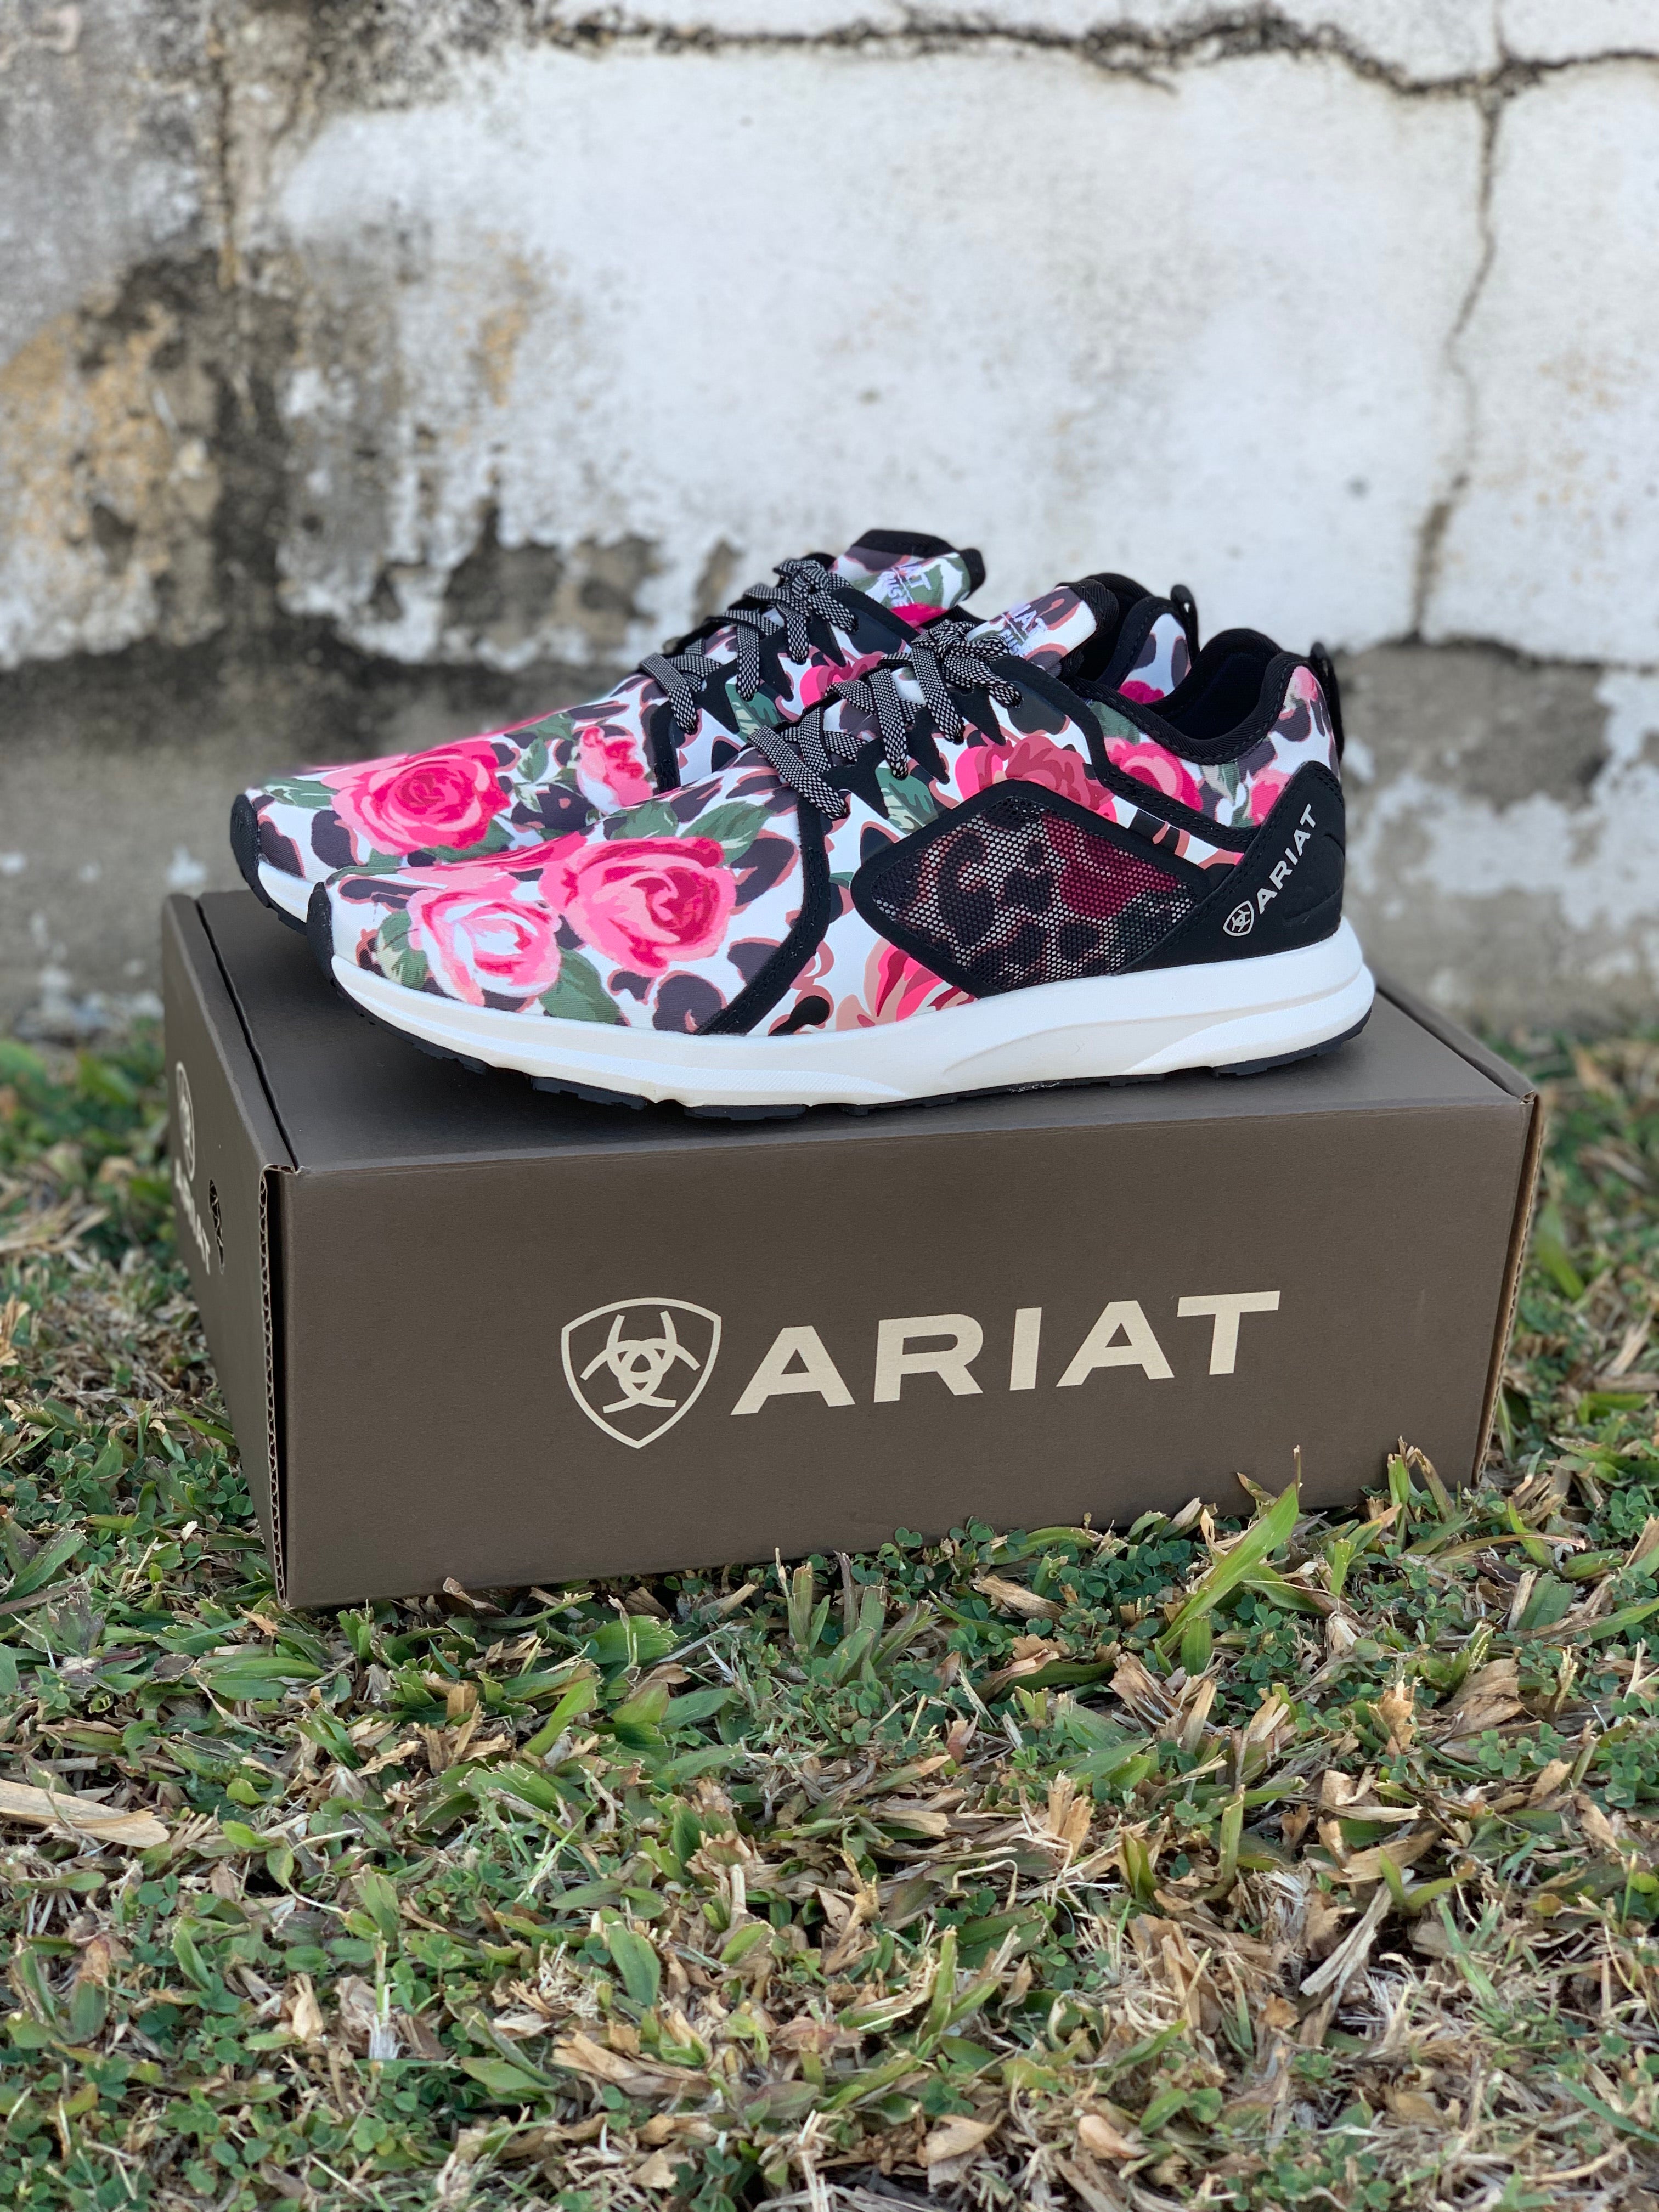 ariat rose tennis shoes